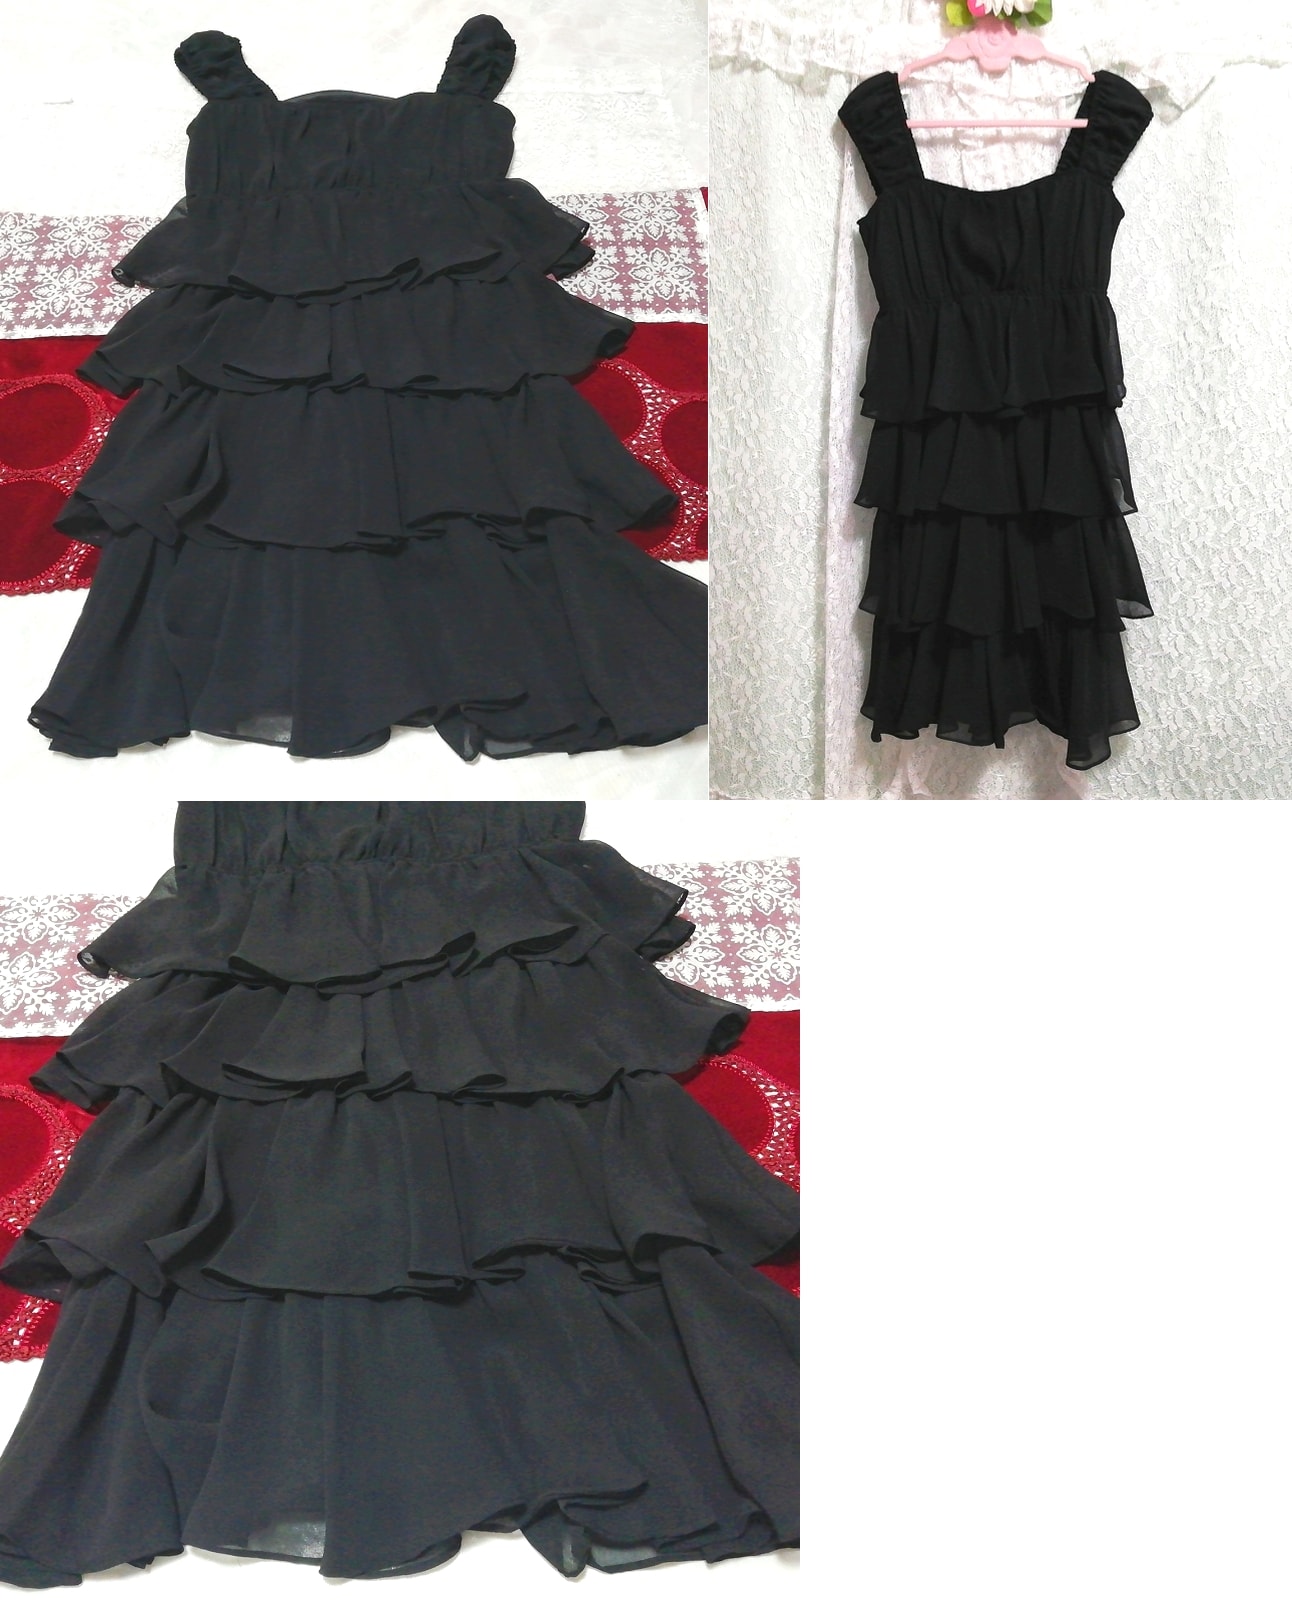 Black frilled chiffon sleeveless negligee nightgown half dress, knee length skirt, m size